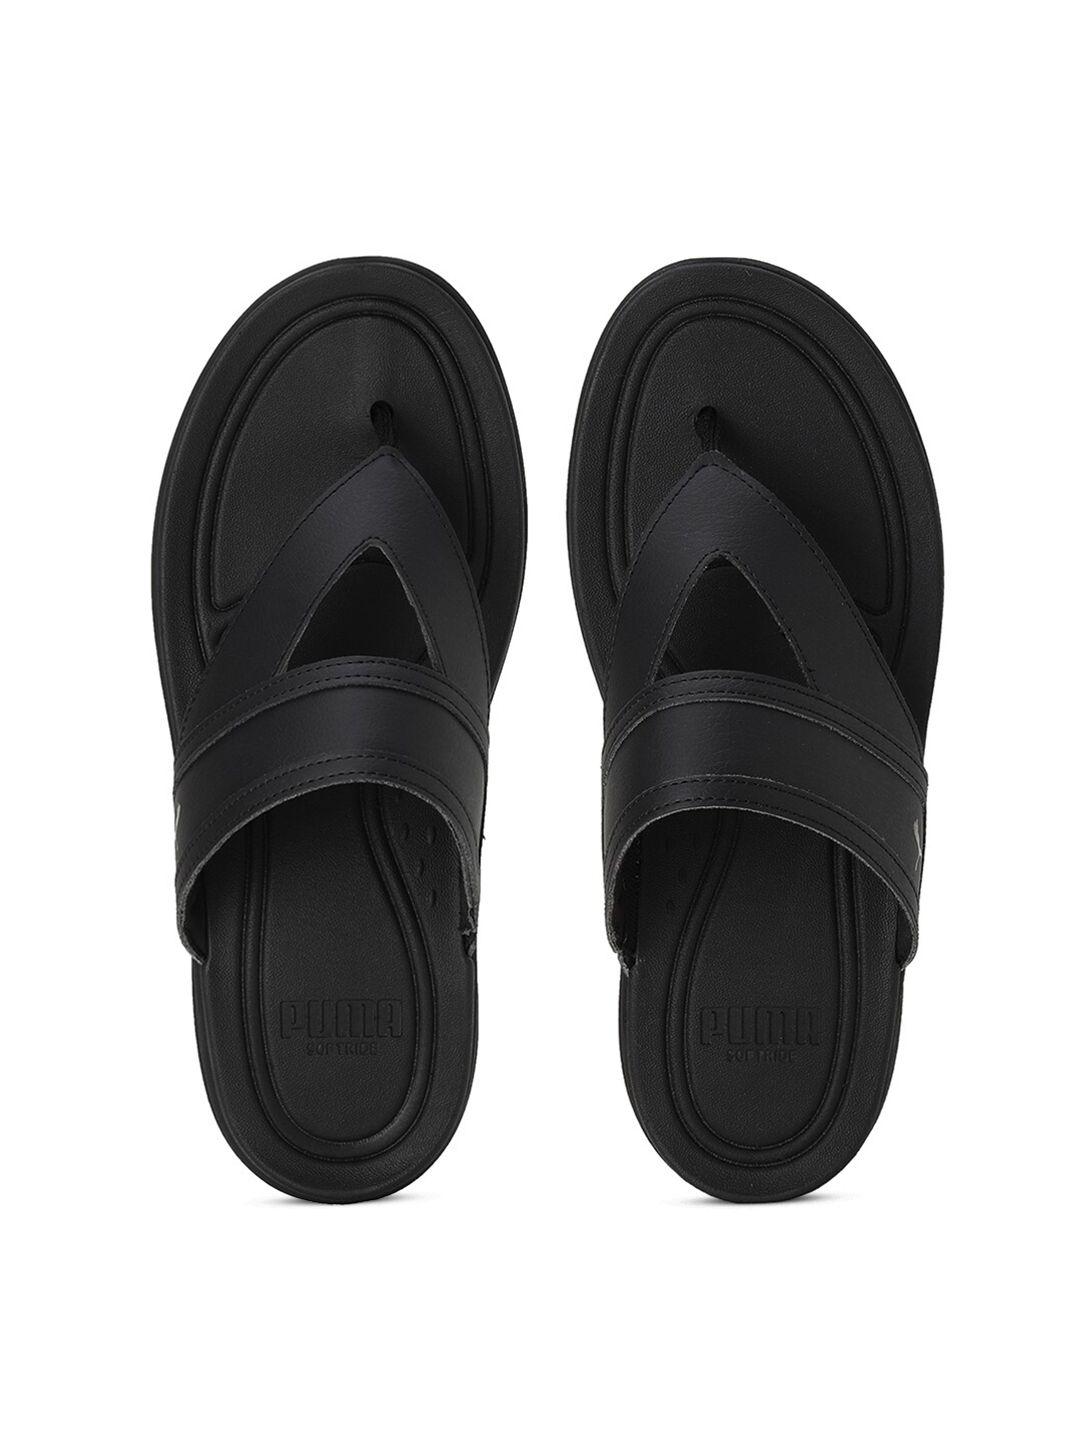 puma women black sandals